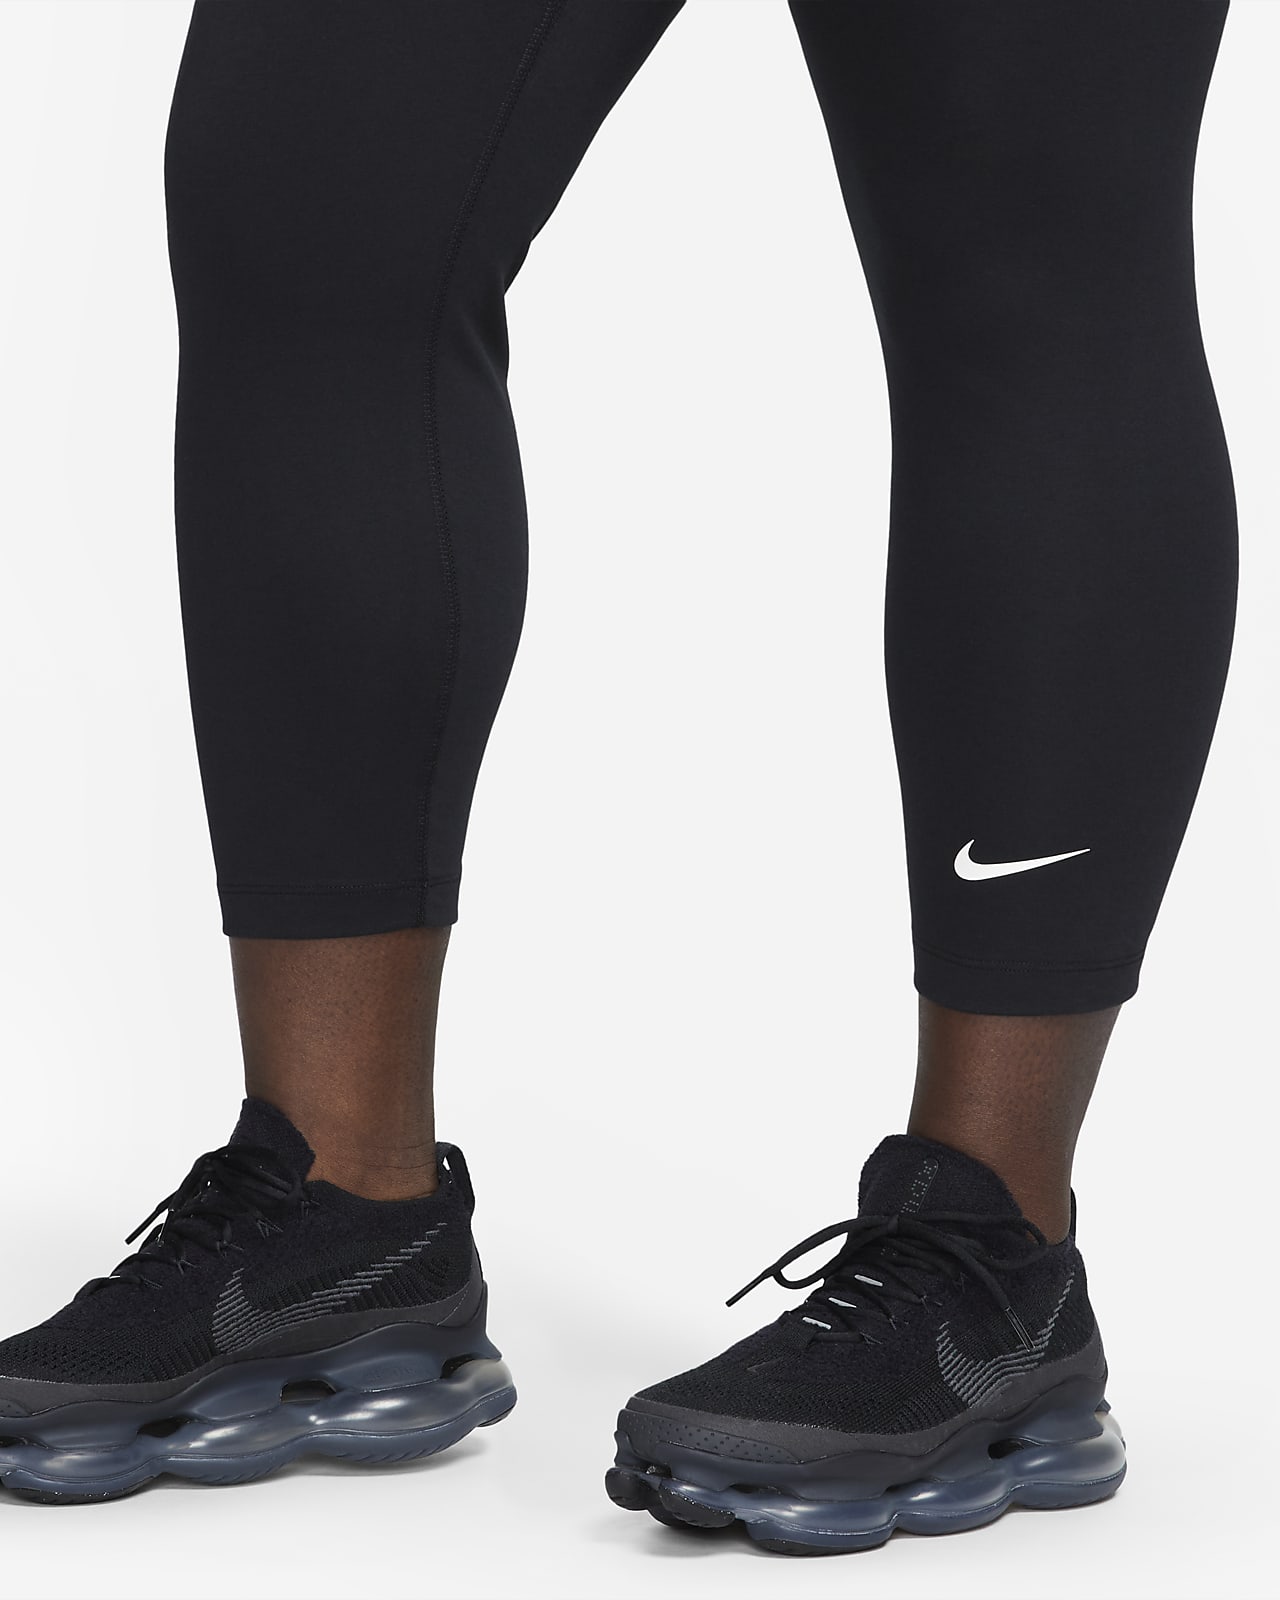 Nike Air Womens 7/8 Logo Prints Running Leggings CU3095-010 - Size Small